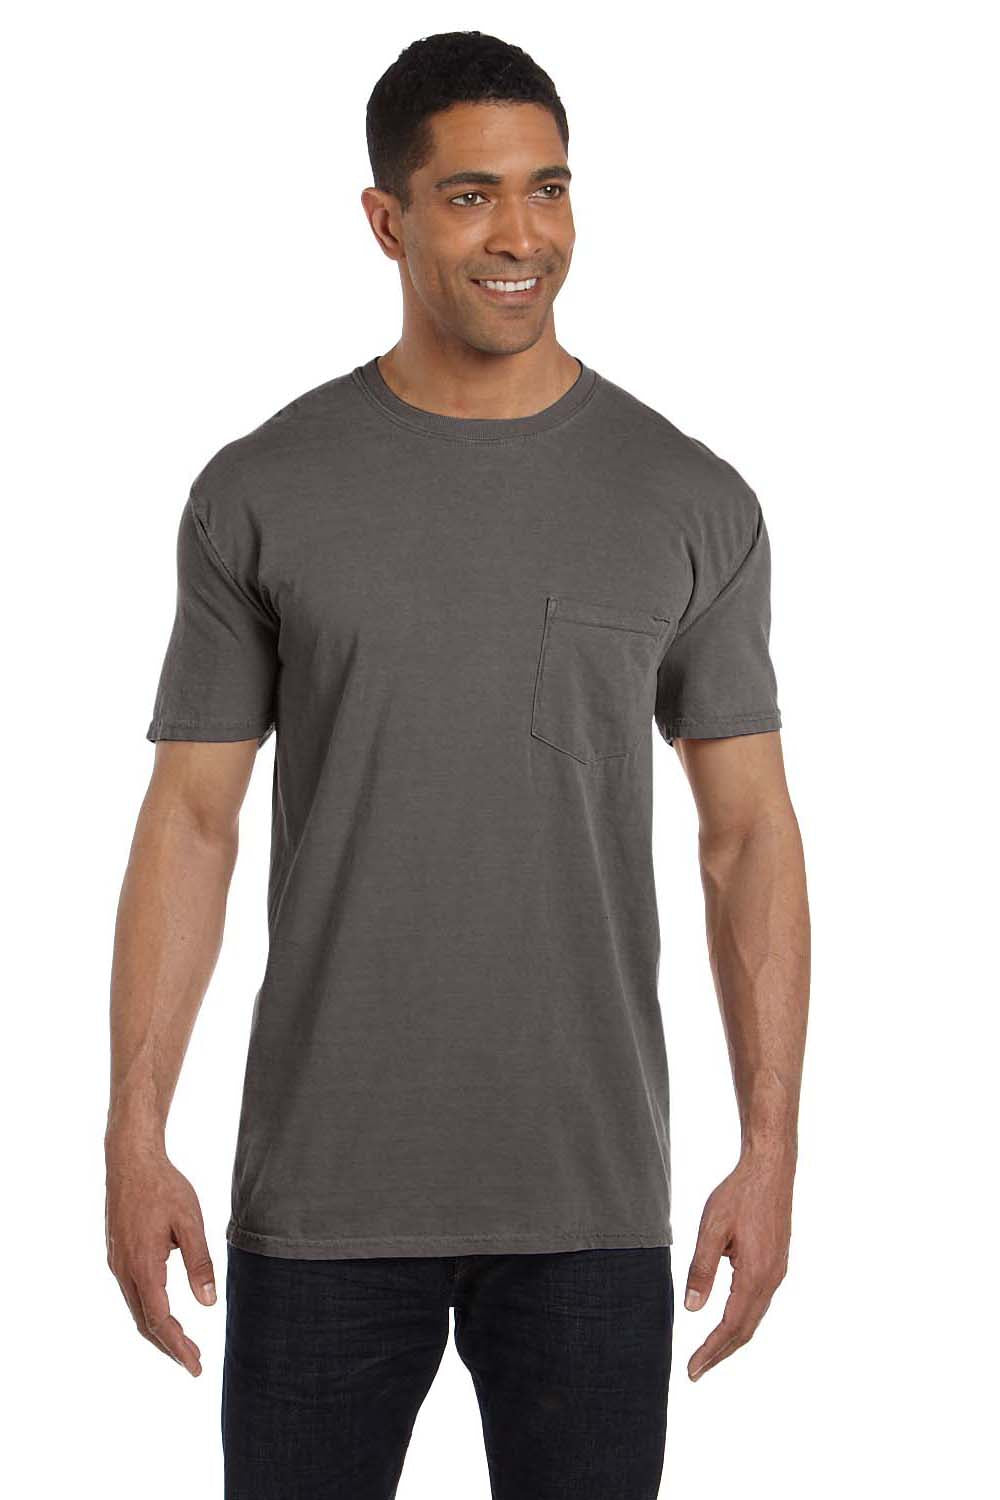 Comfort Colors 6030CC - Adult Heavyweight Pocket T-Shirt, Pepper, XL